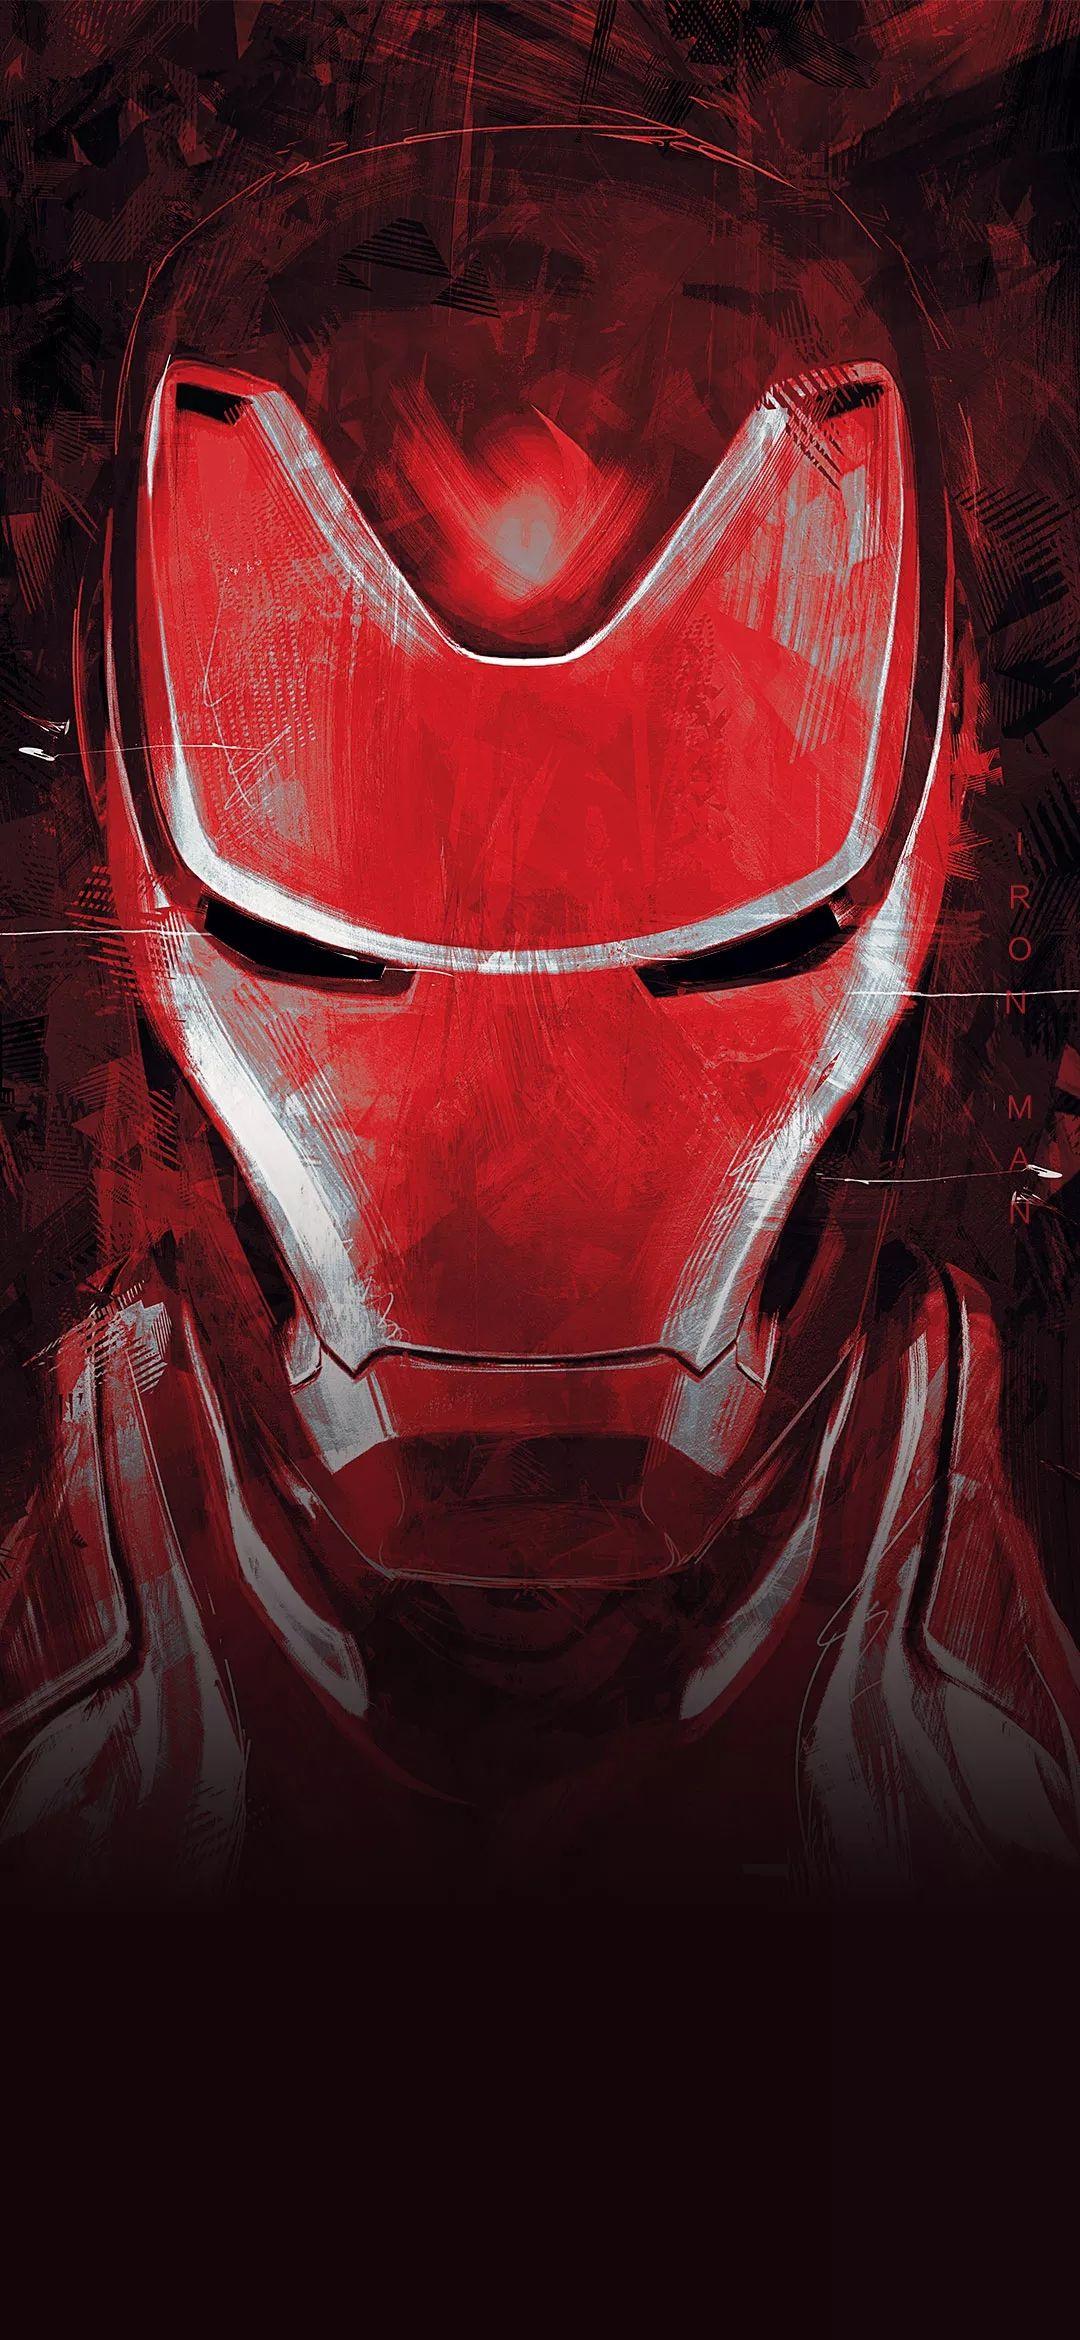 Redmi K20 Pro Wallpaper (YTECHB Exclusive). Iron man wallpaper, Iron man HD wallpaper, Superhero wallpaper iphone